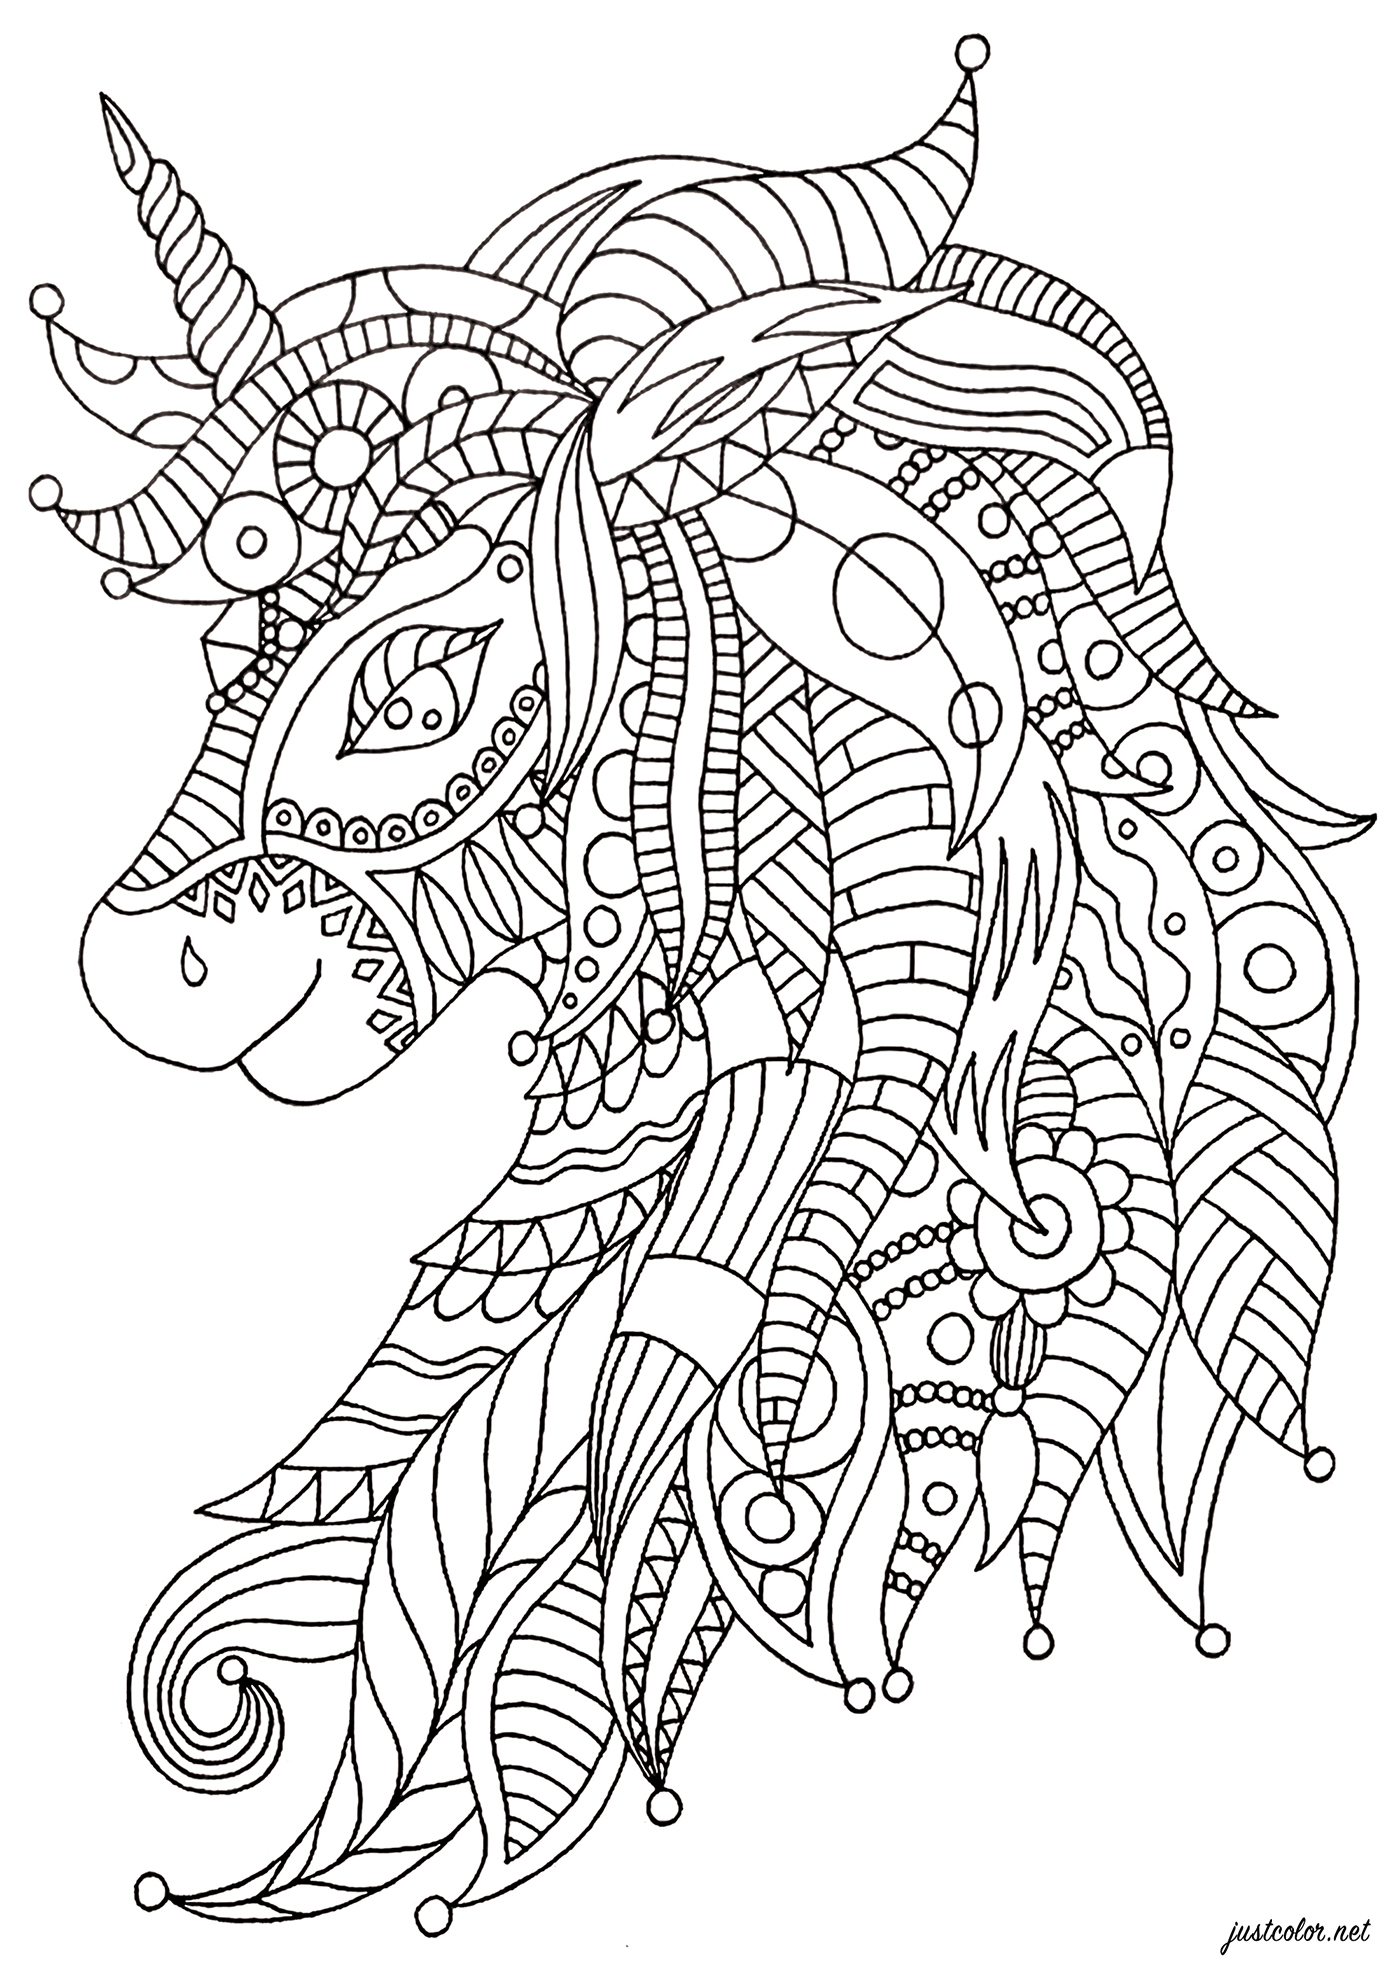 Un majestuoso unicornio con motivos de Zentangle